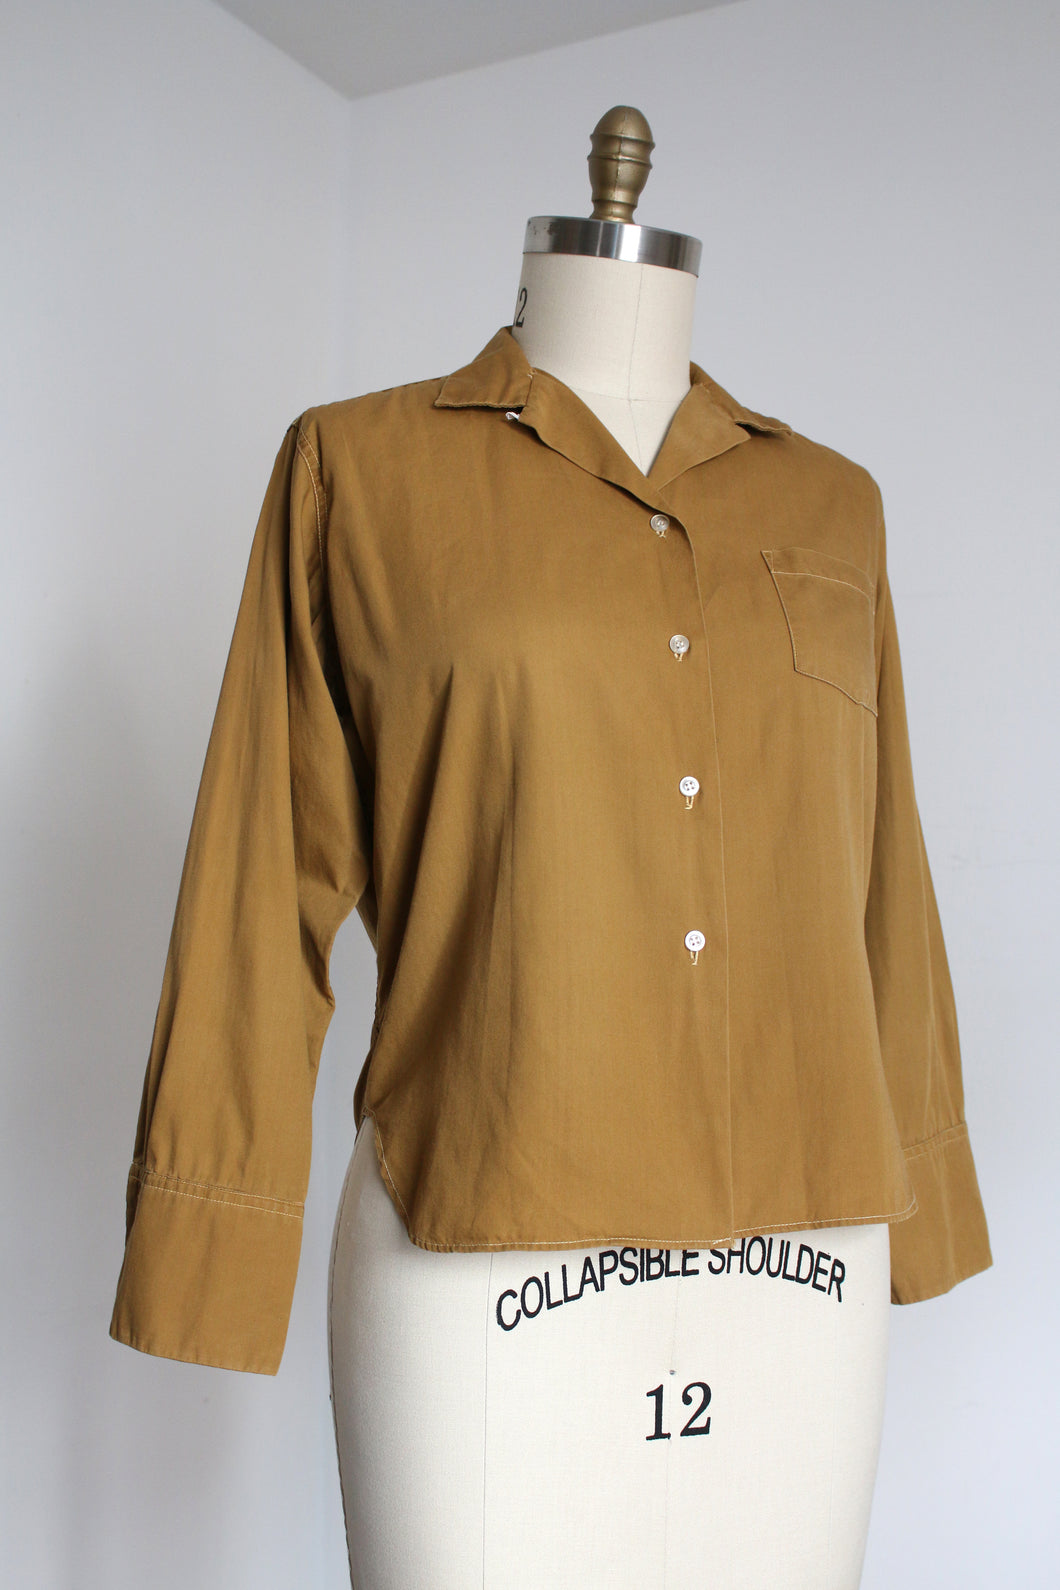 vintage 1950s ochre blouse {L}